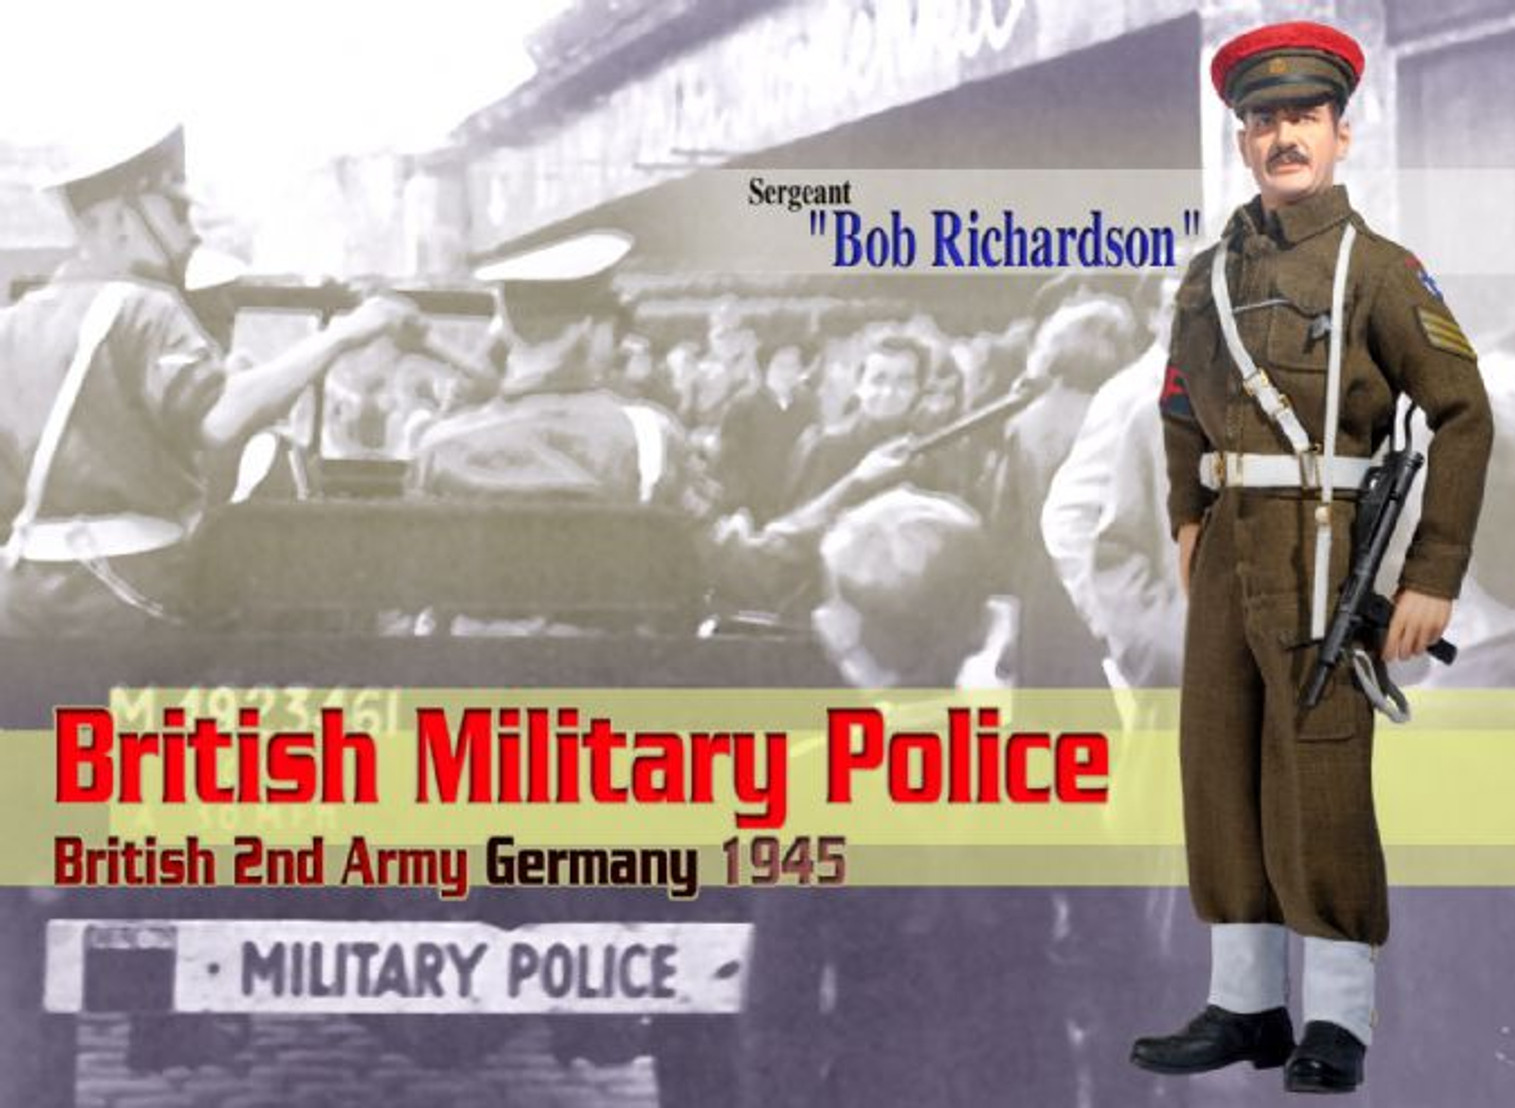 "Bob Richardson", British Military Police, British 2nd Army, Germany 1945 (Sergeant) - Damaged Left Hand